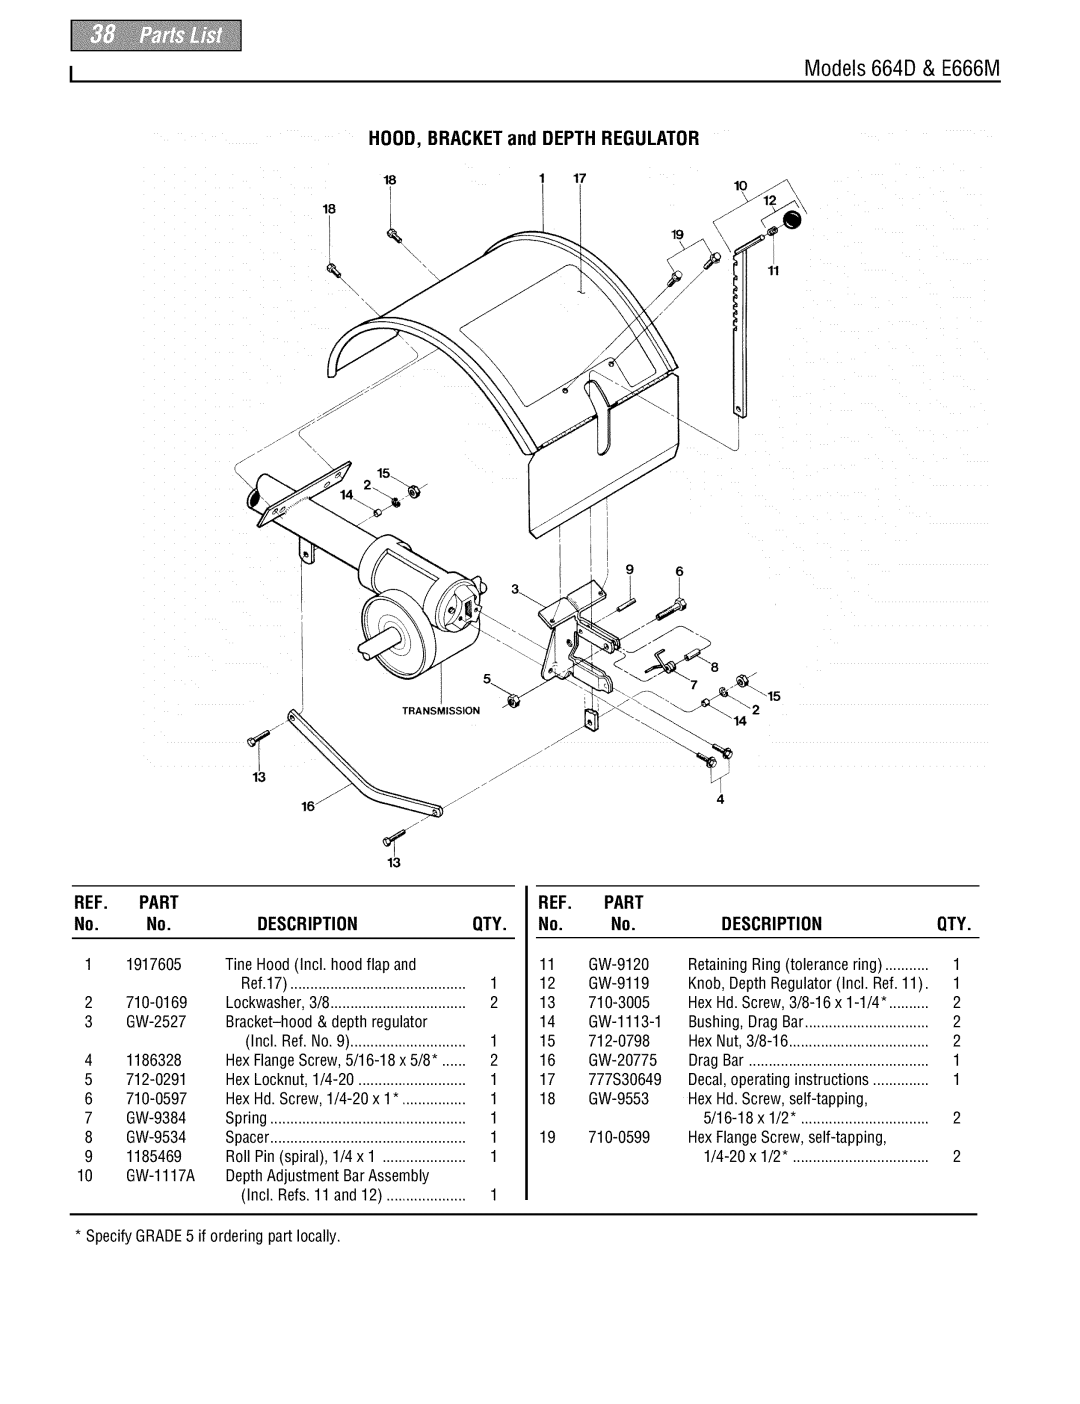 Troy-Bilt 664DM, E666MM manual HOOD, BRACKET and DEPTH REGULATOR, Models 664D & E666M, Part, Description 